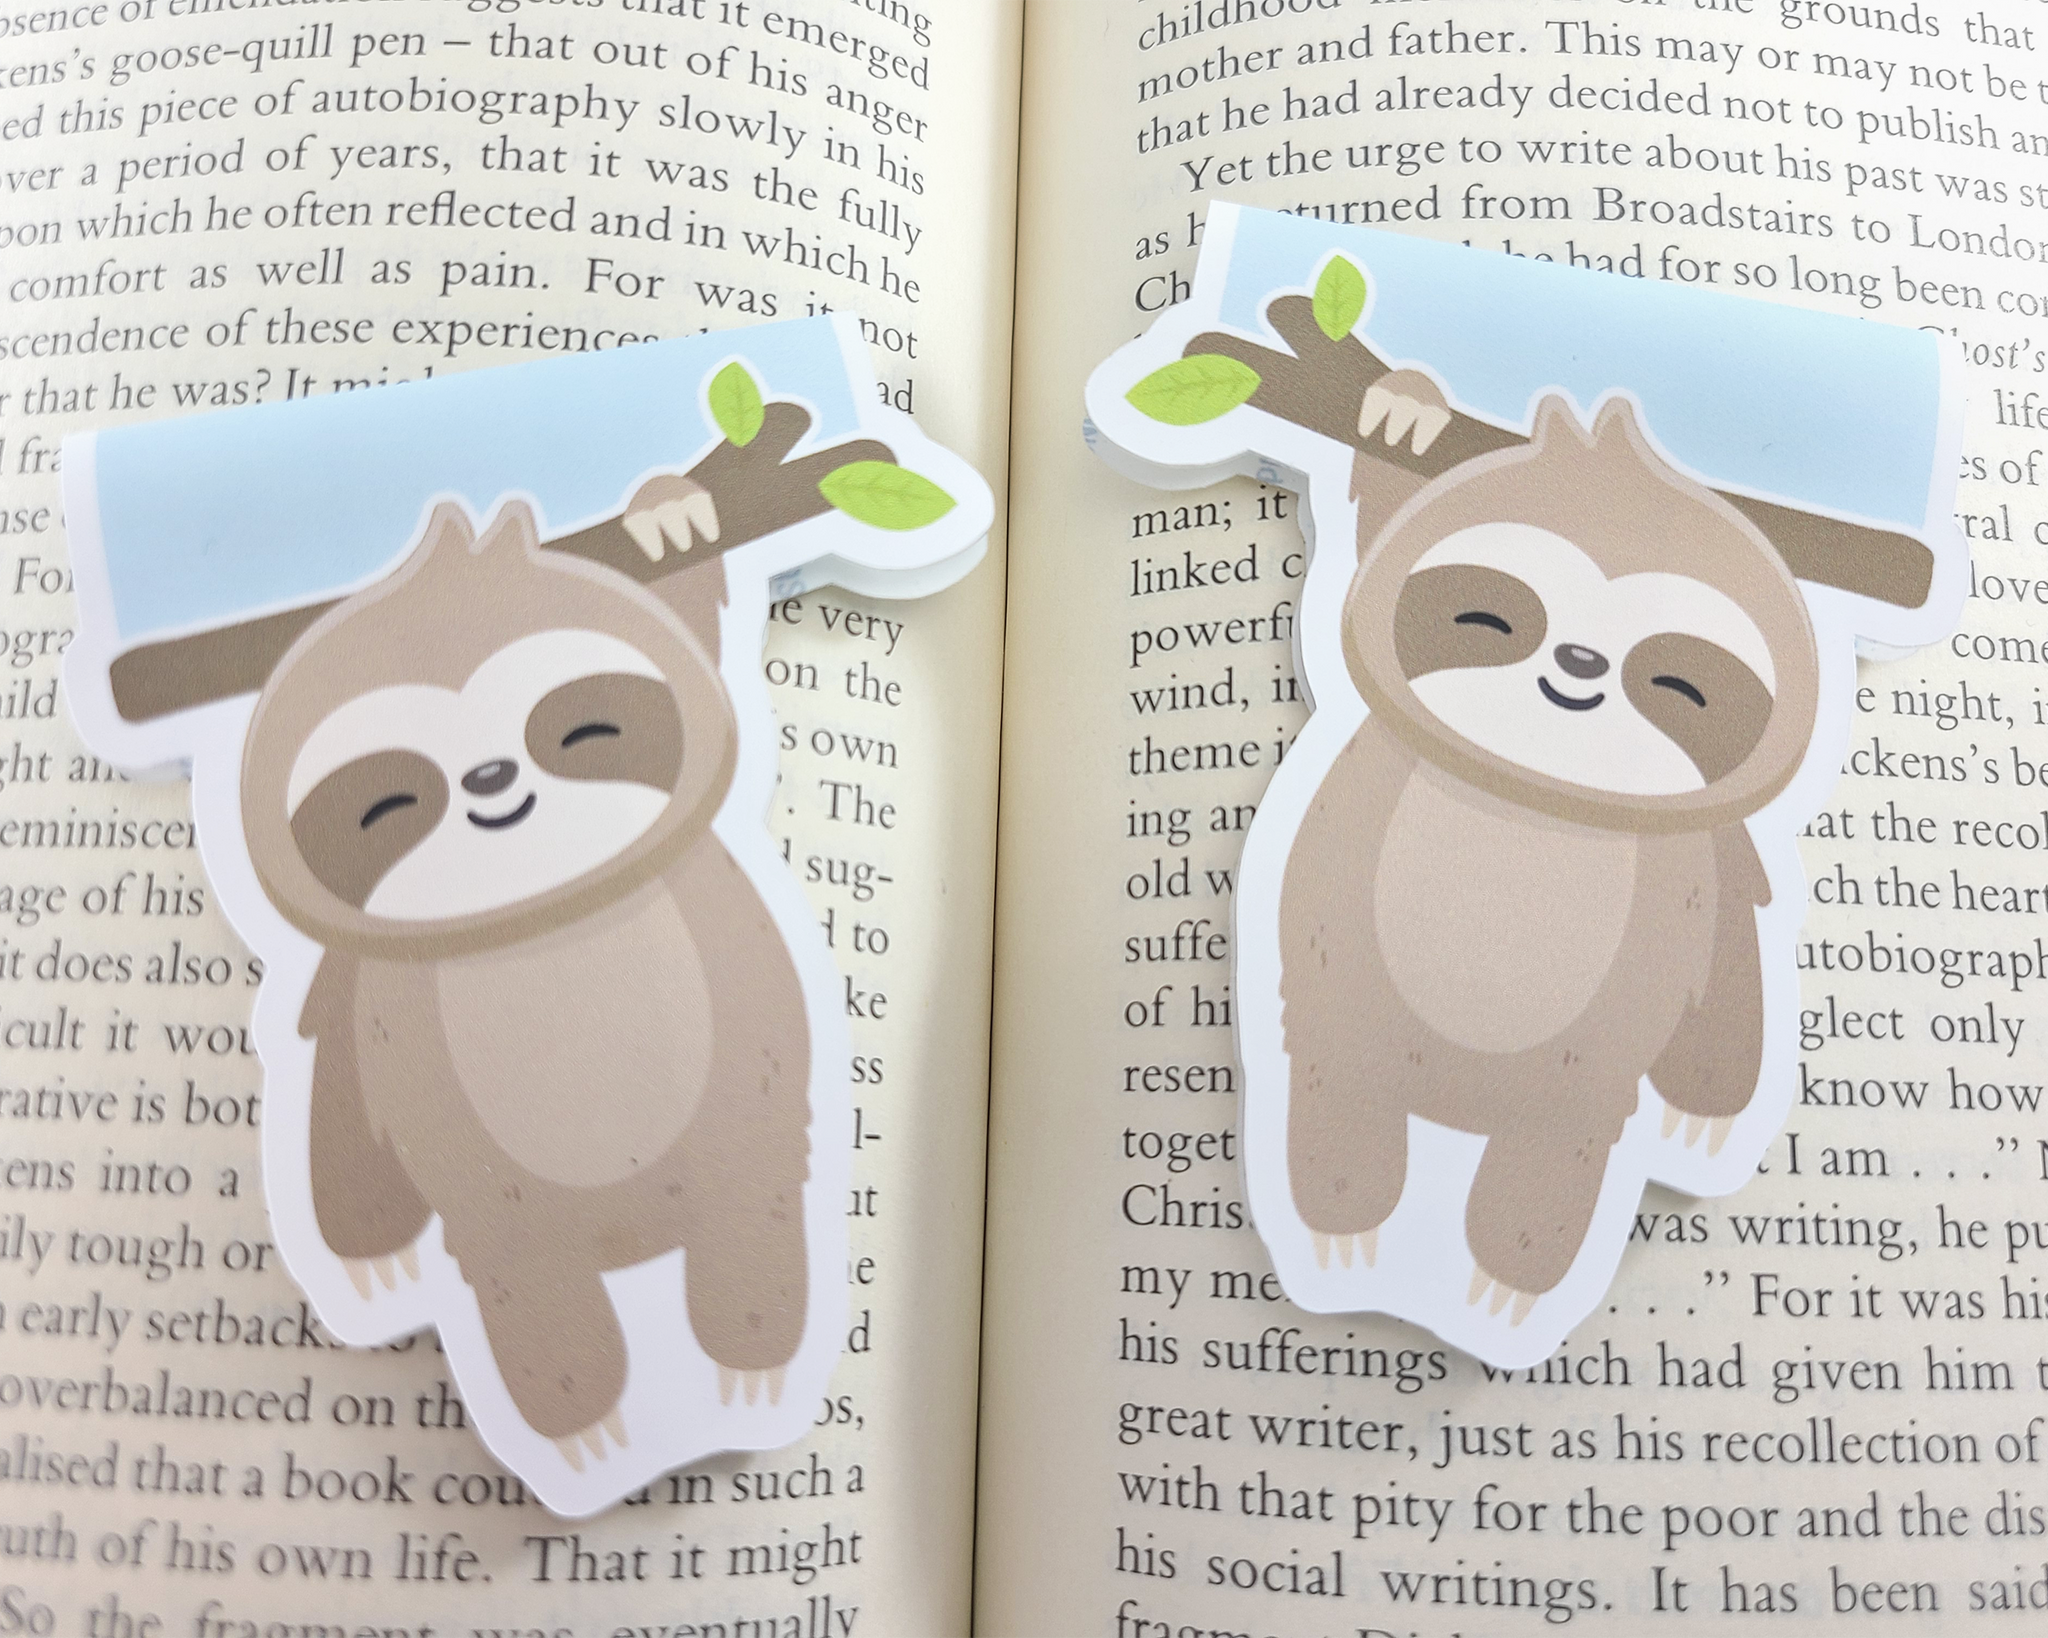 Sloth Hanging Magnetic Bookmark